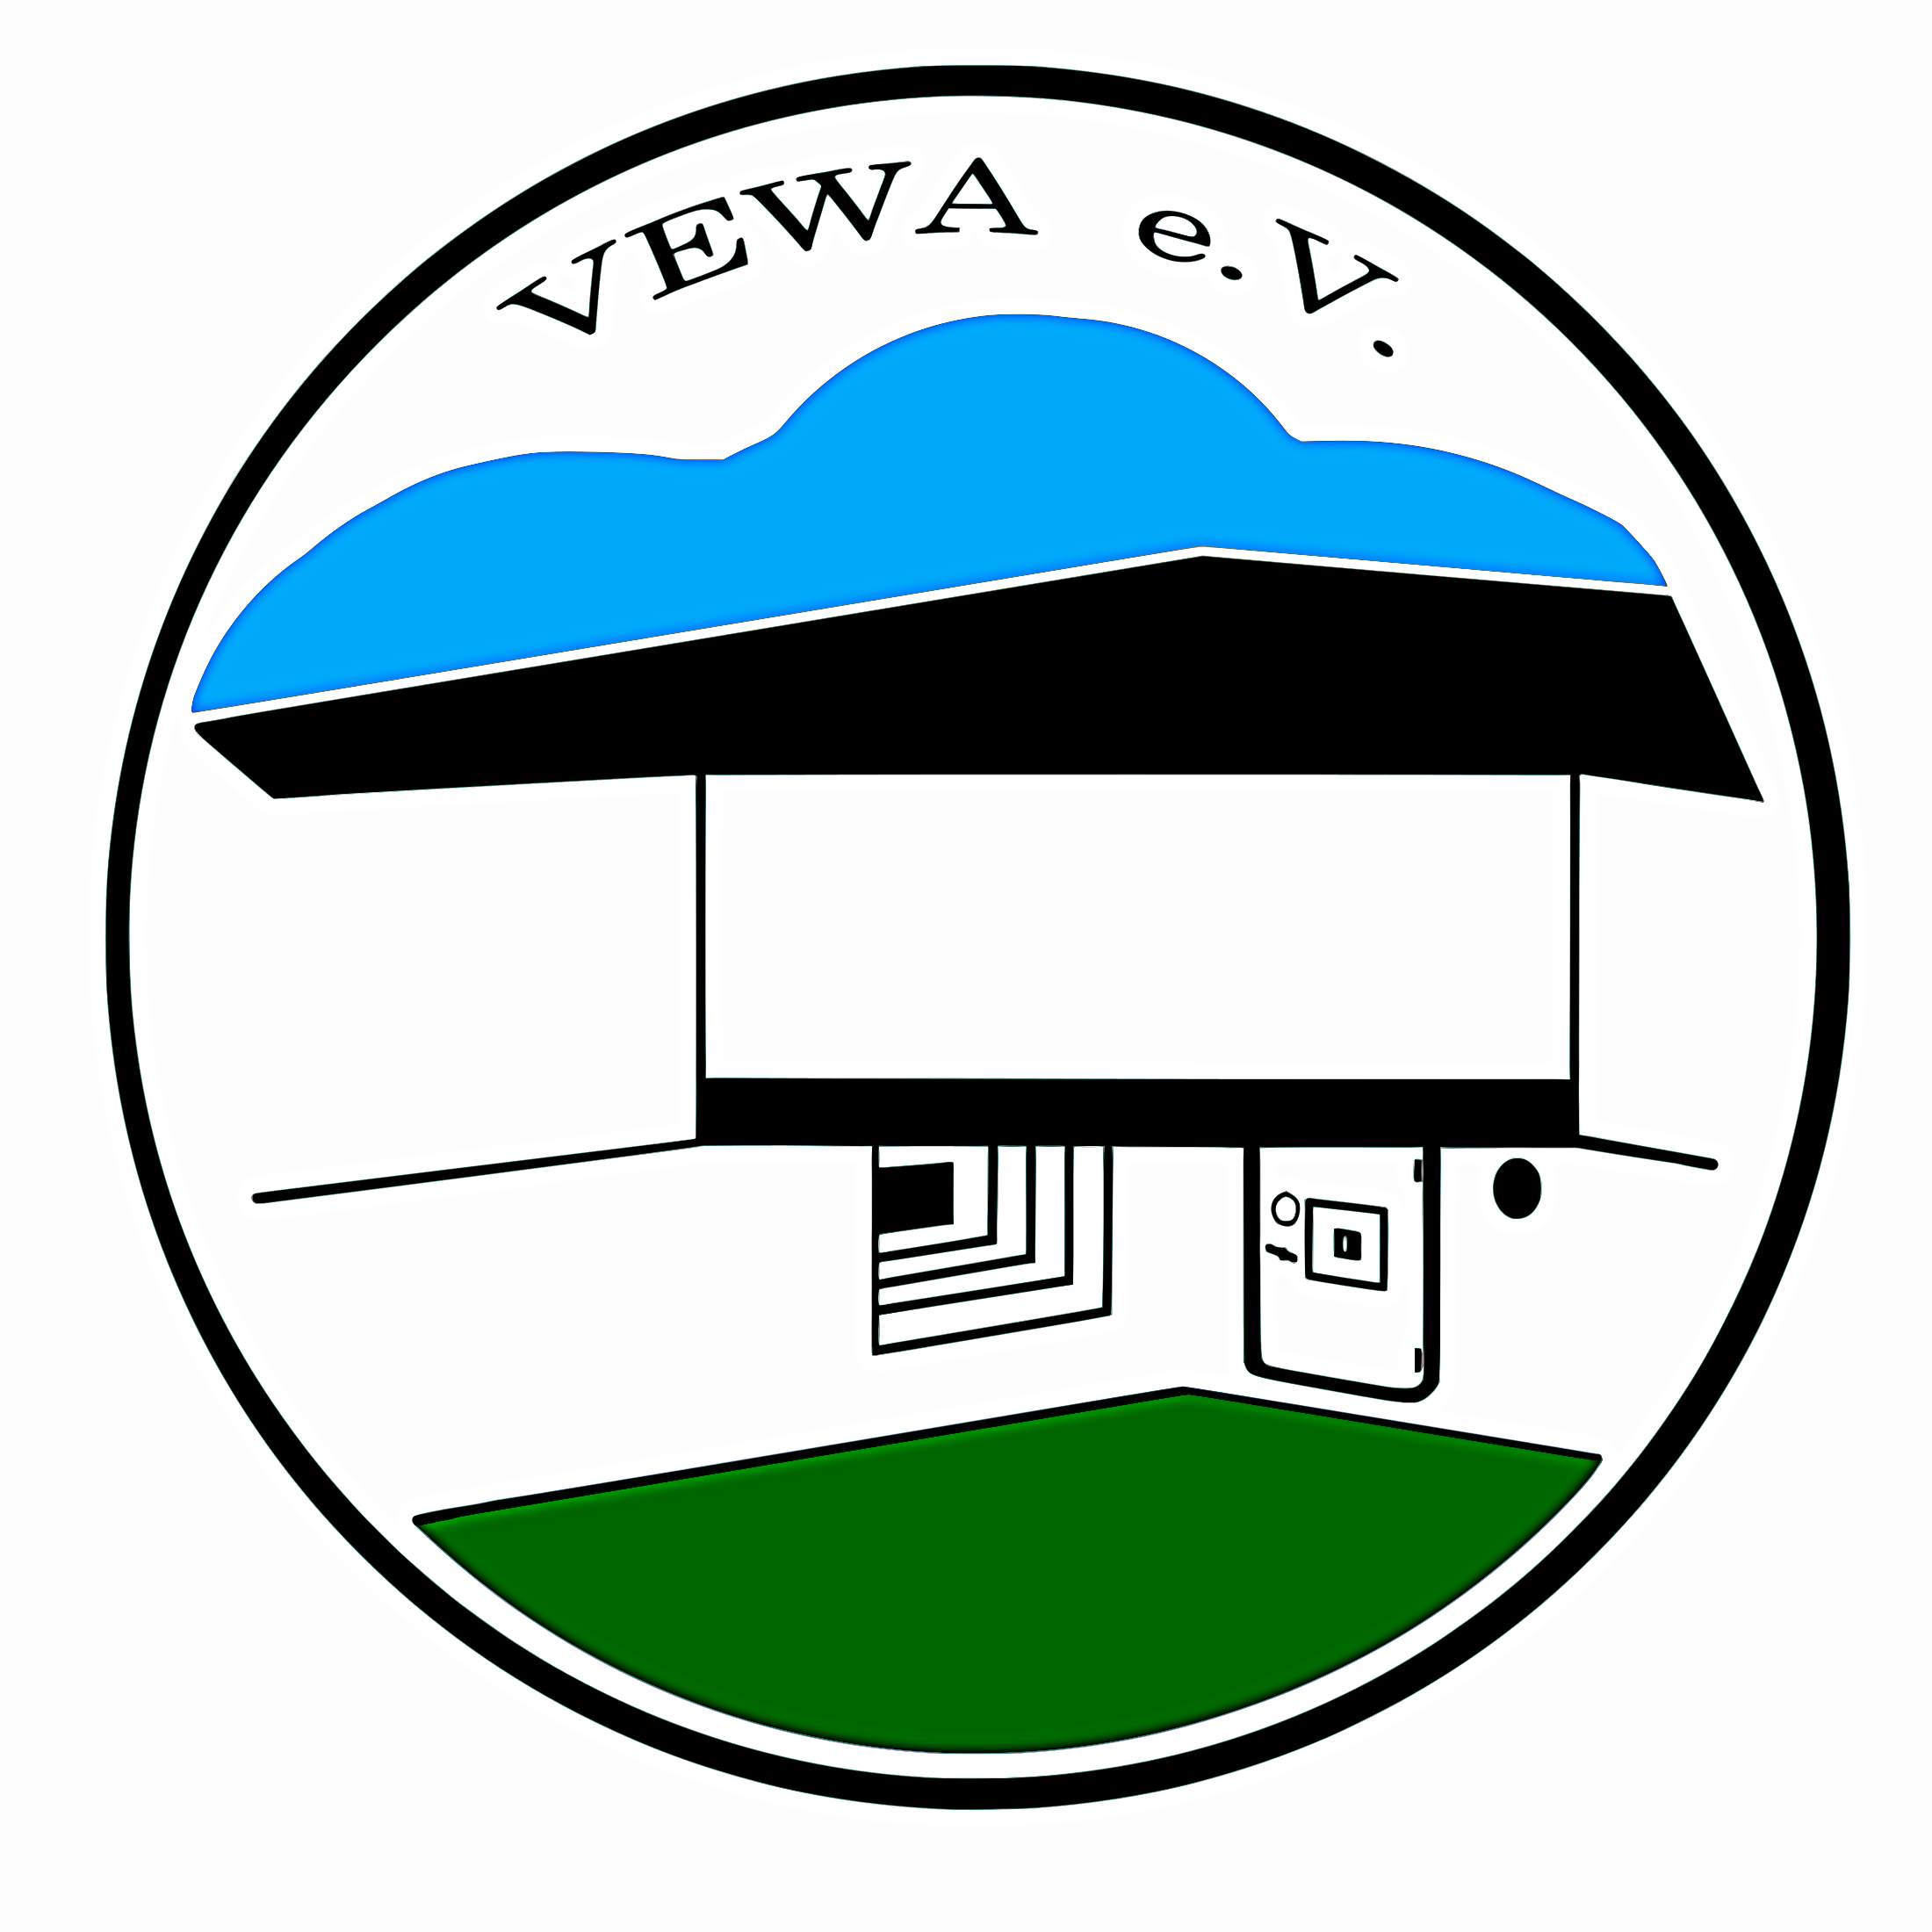 10-vewa-logo-final.png